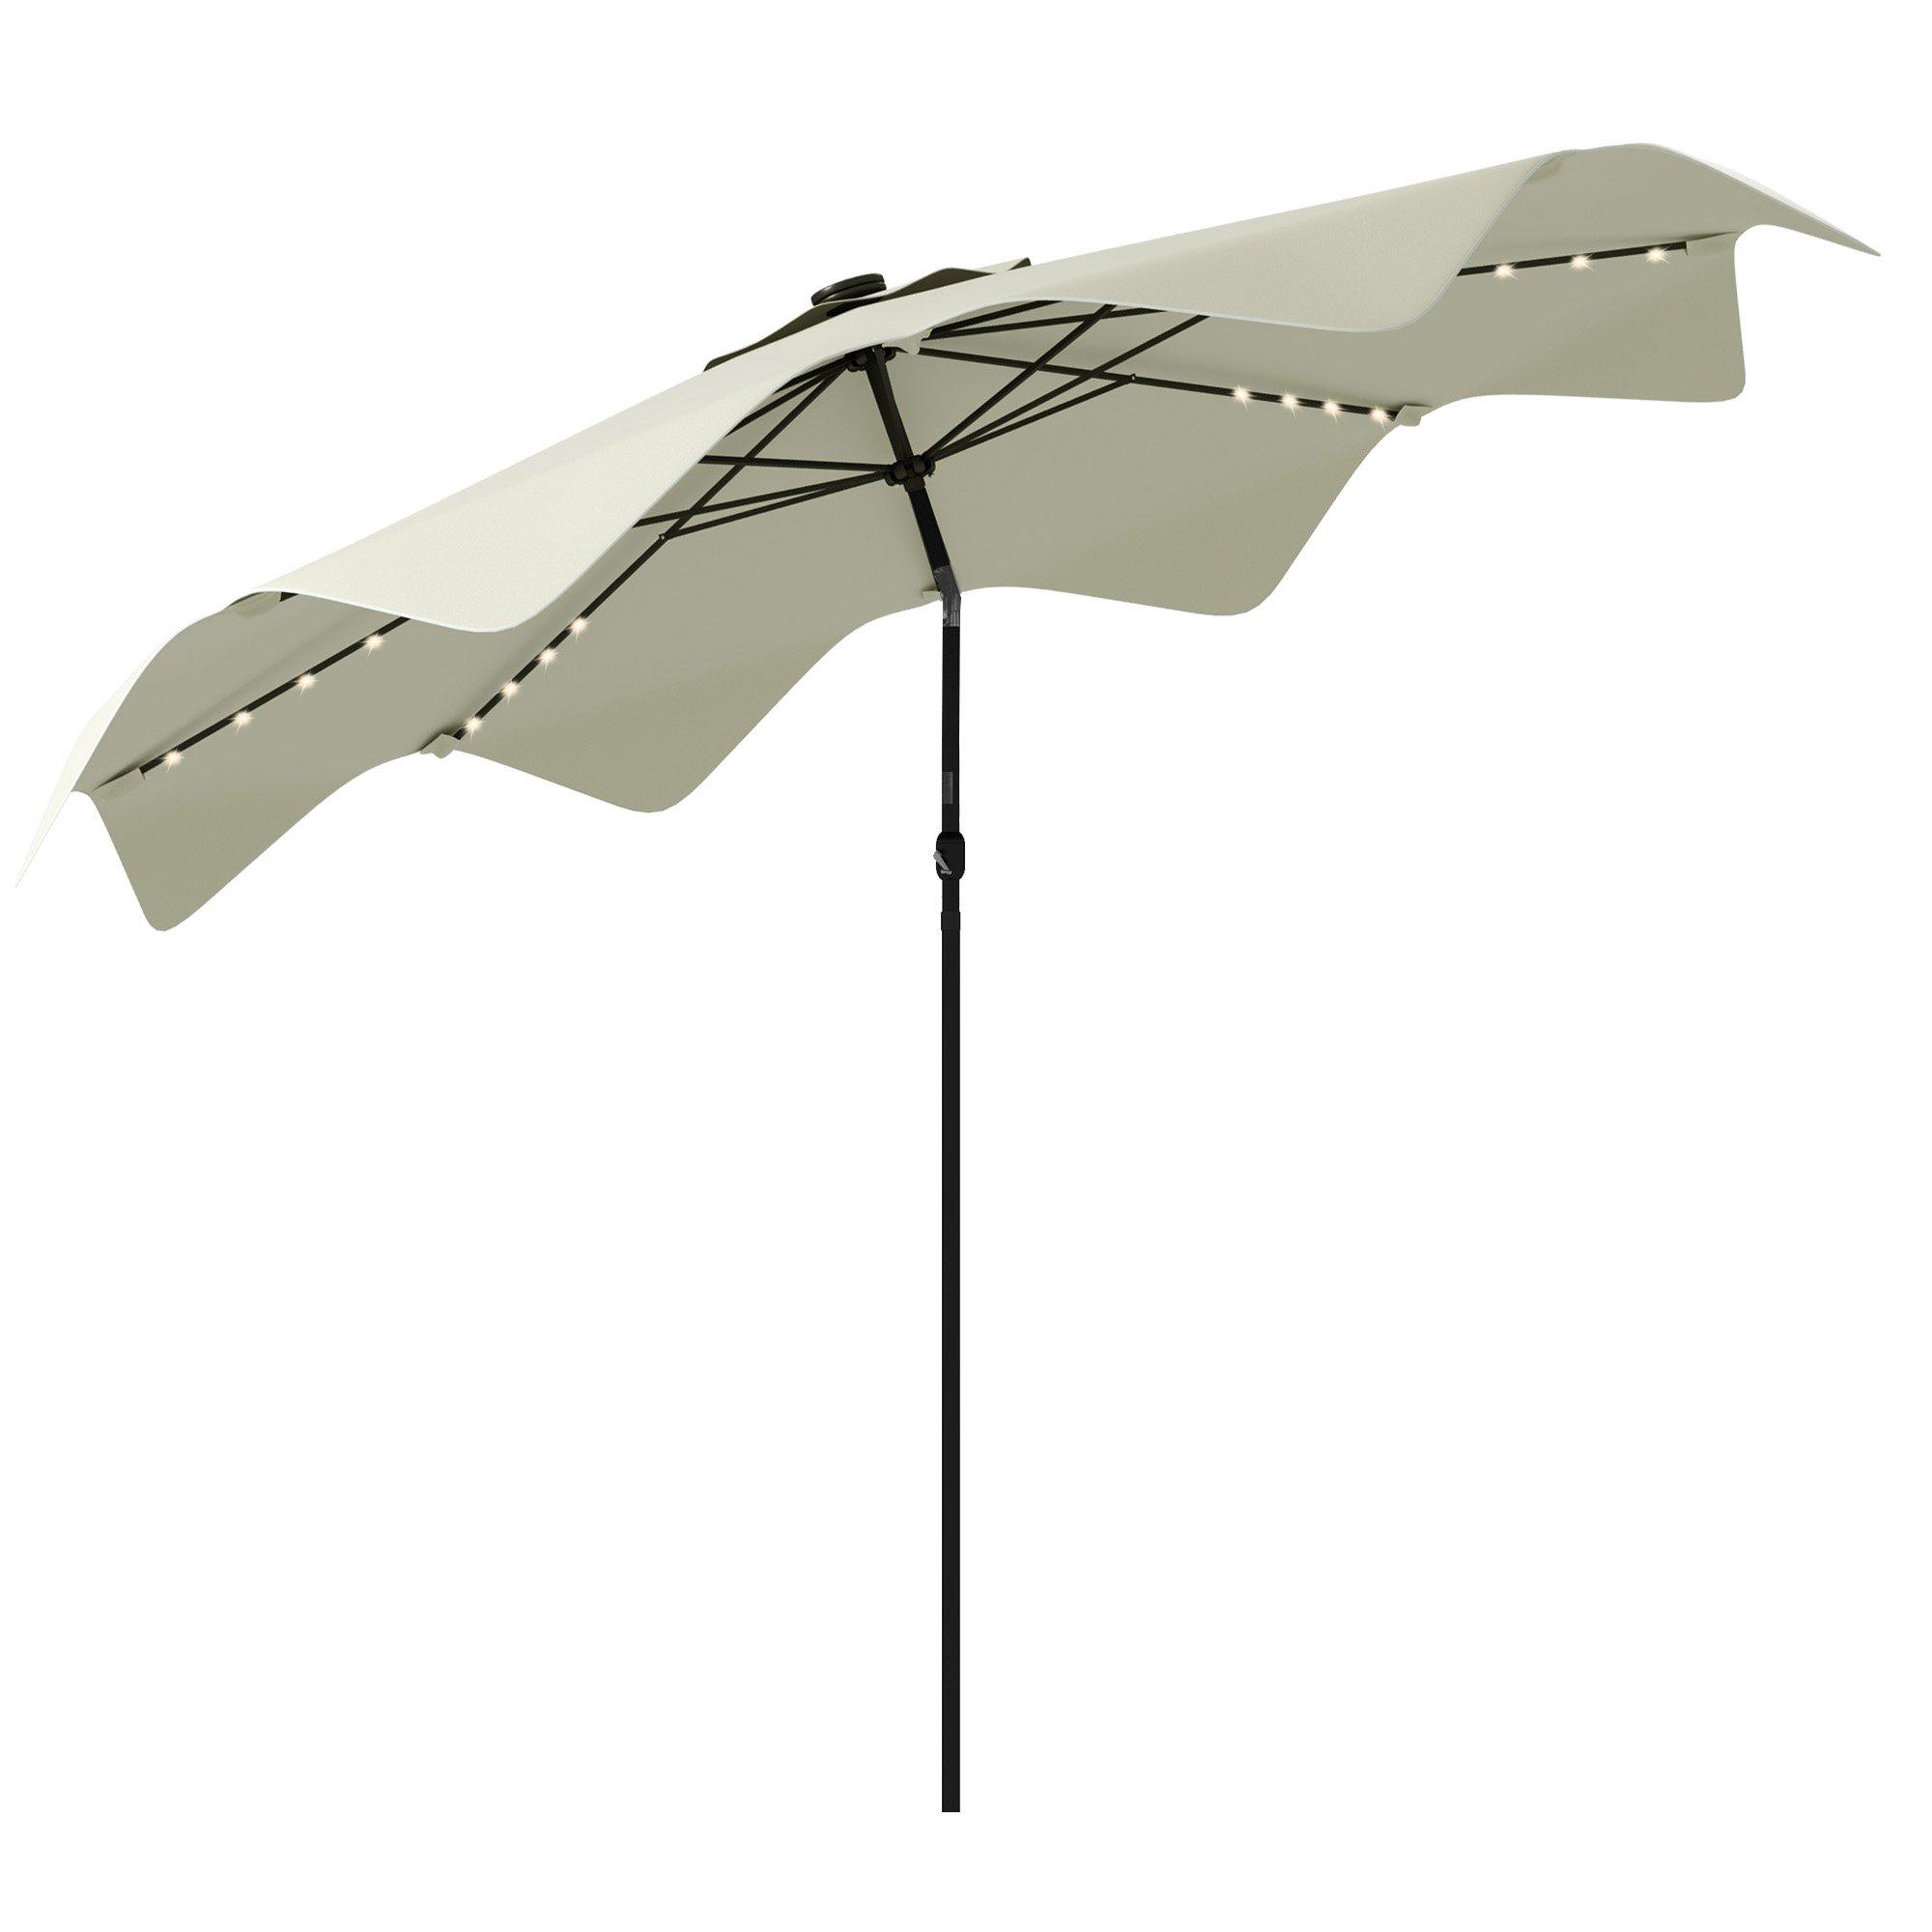 Garden Parasol Umbrella with LED Lights and Tilt, Table Umbrella